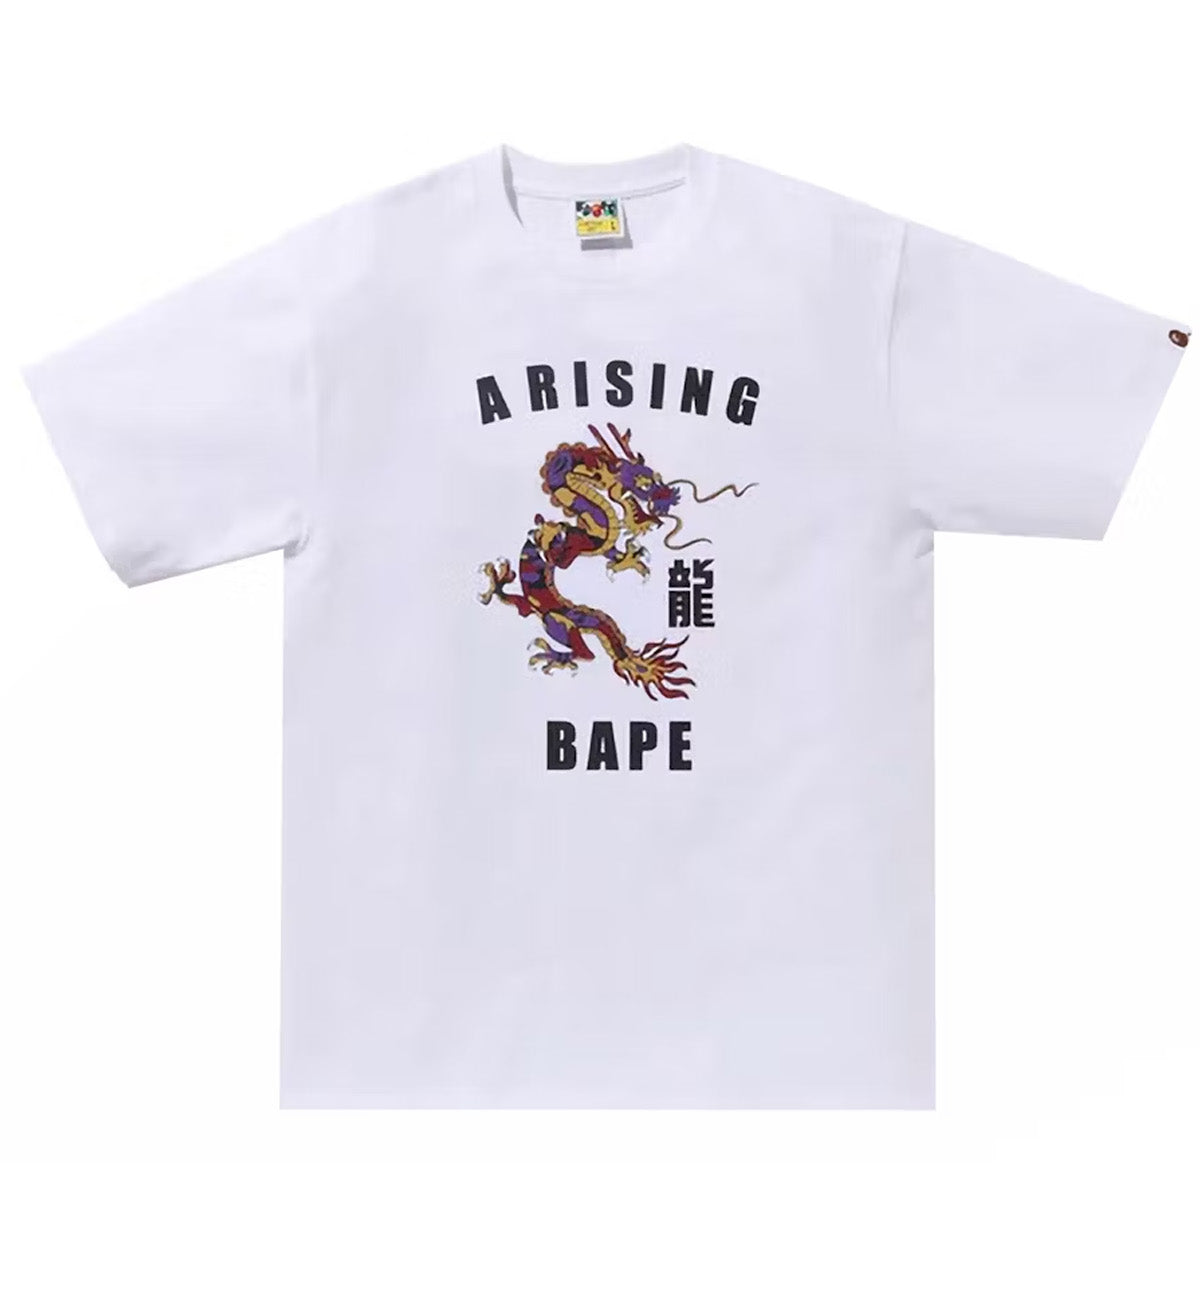 BAPE A Rising Bape Year of Dragon Exclusive Tee (White)